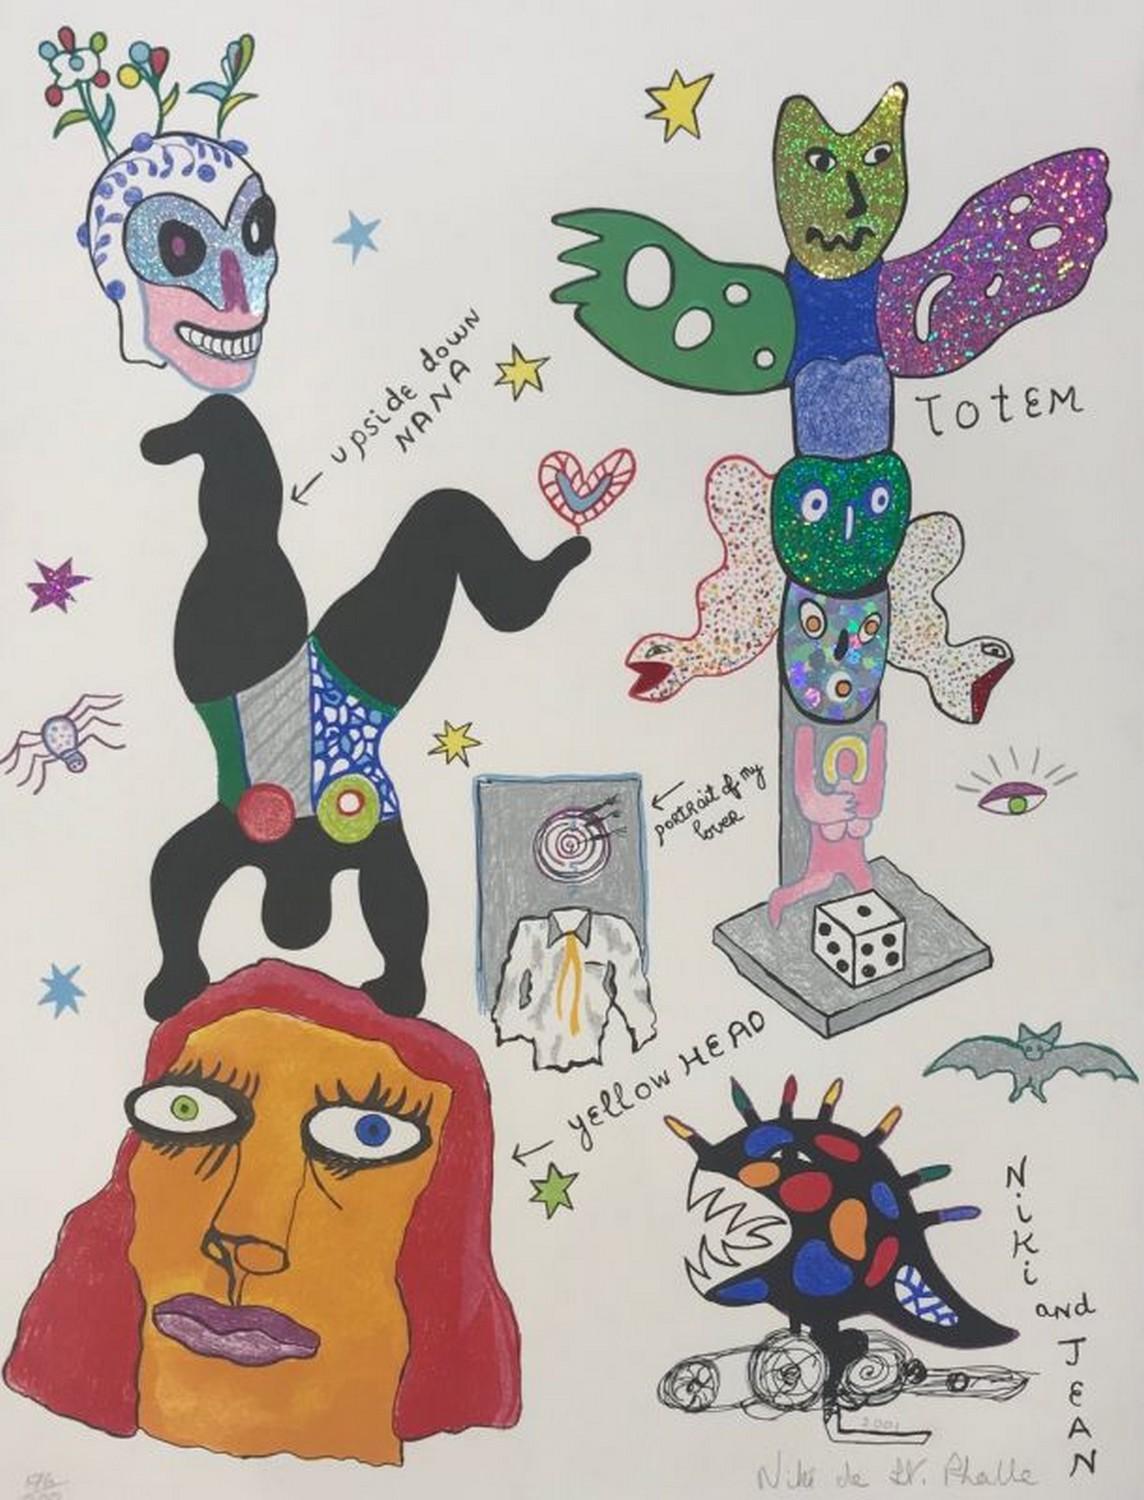 Niki de Saint Phalle Abstract Print - Totem 